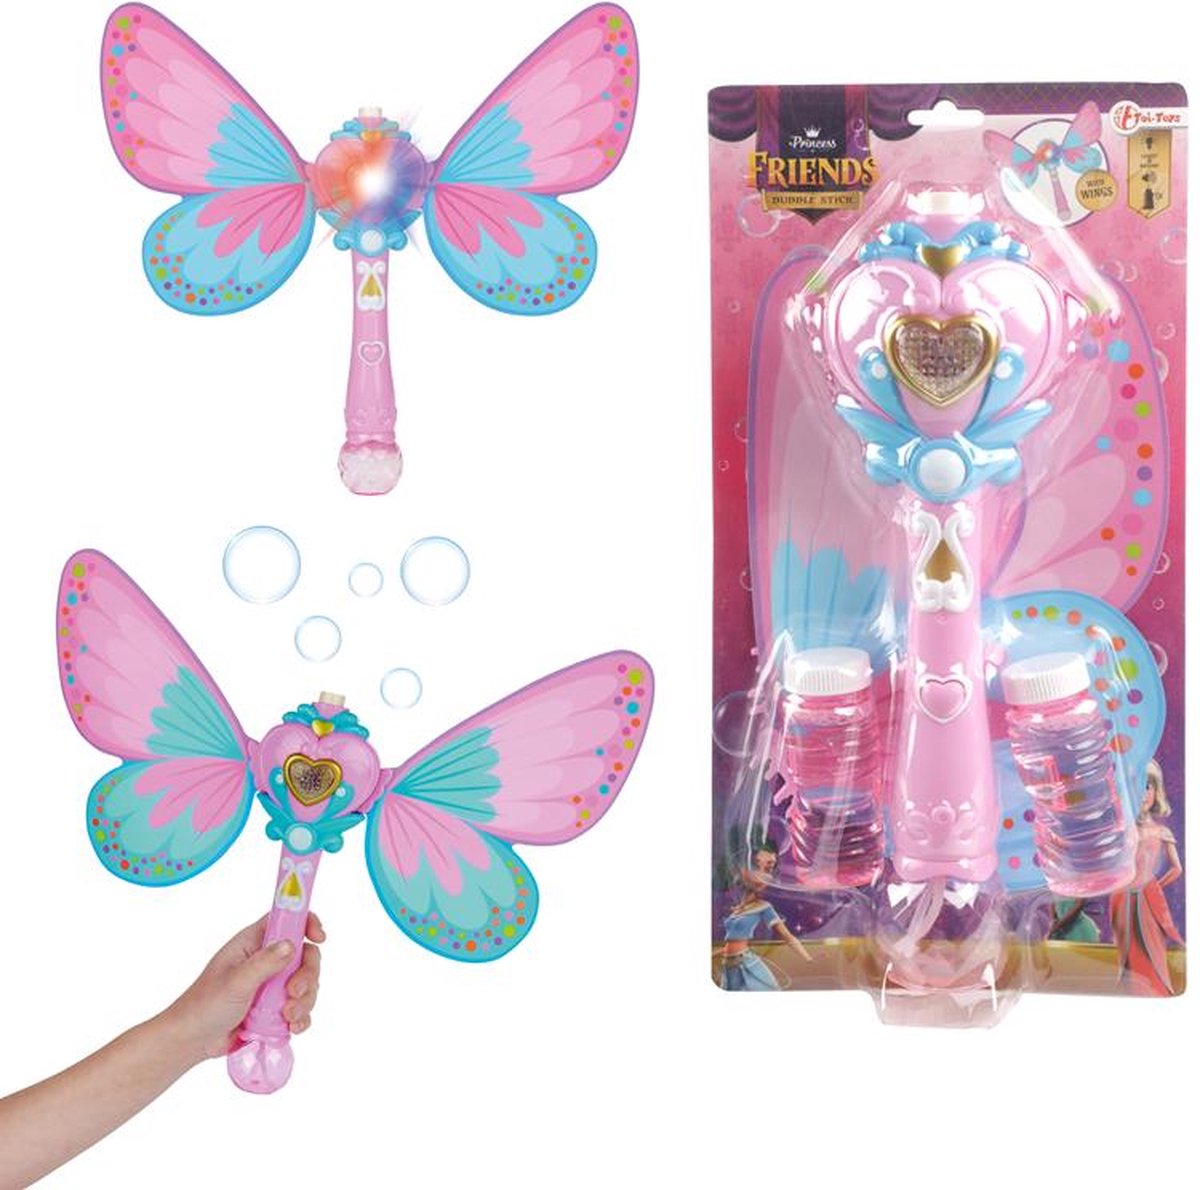 Toi Toys Princess Friends Bellenblaasstaf met vleugels + licht&geluid